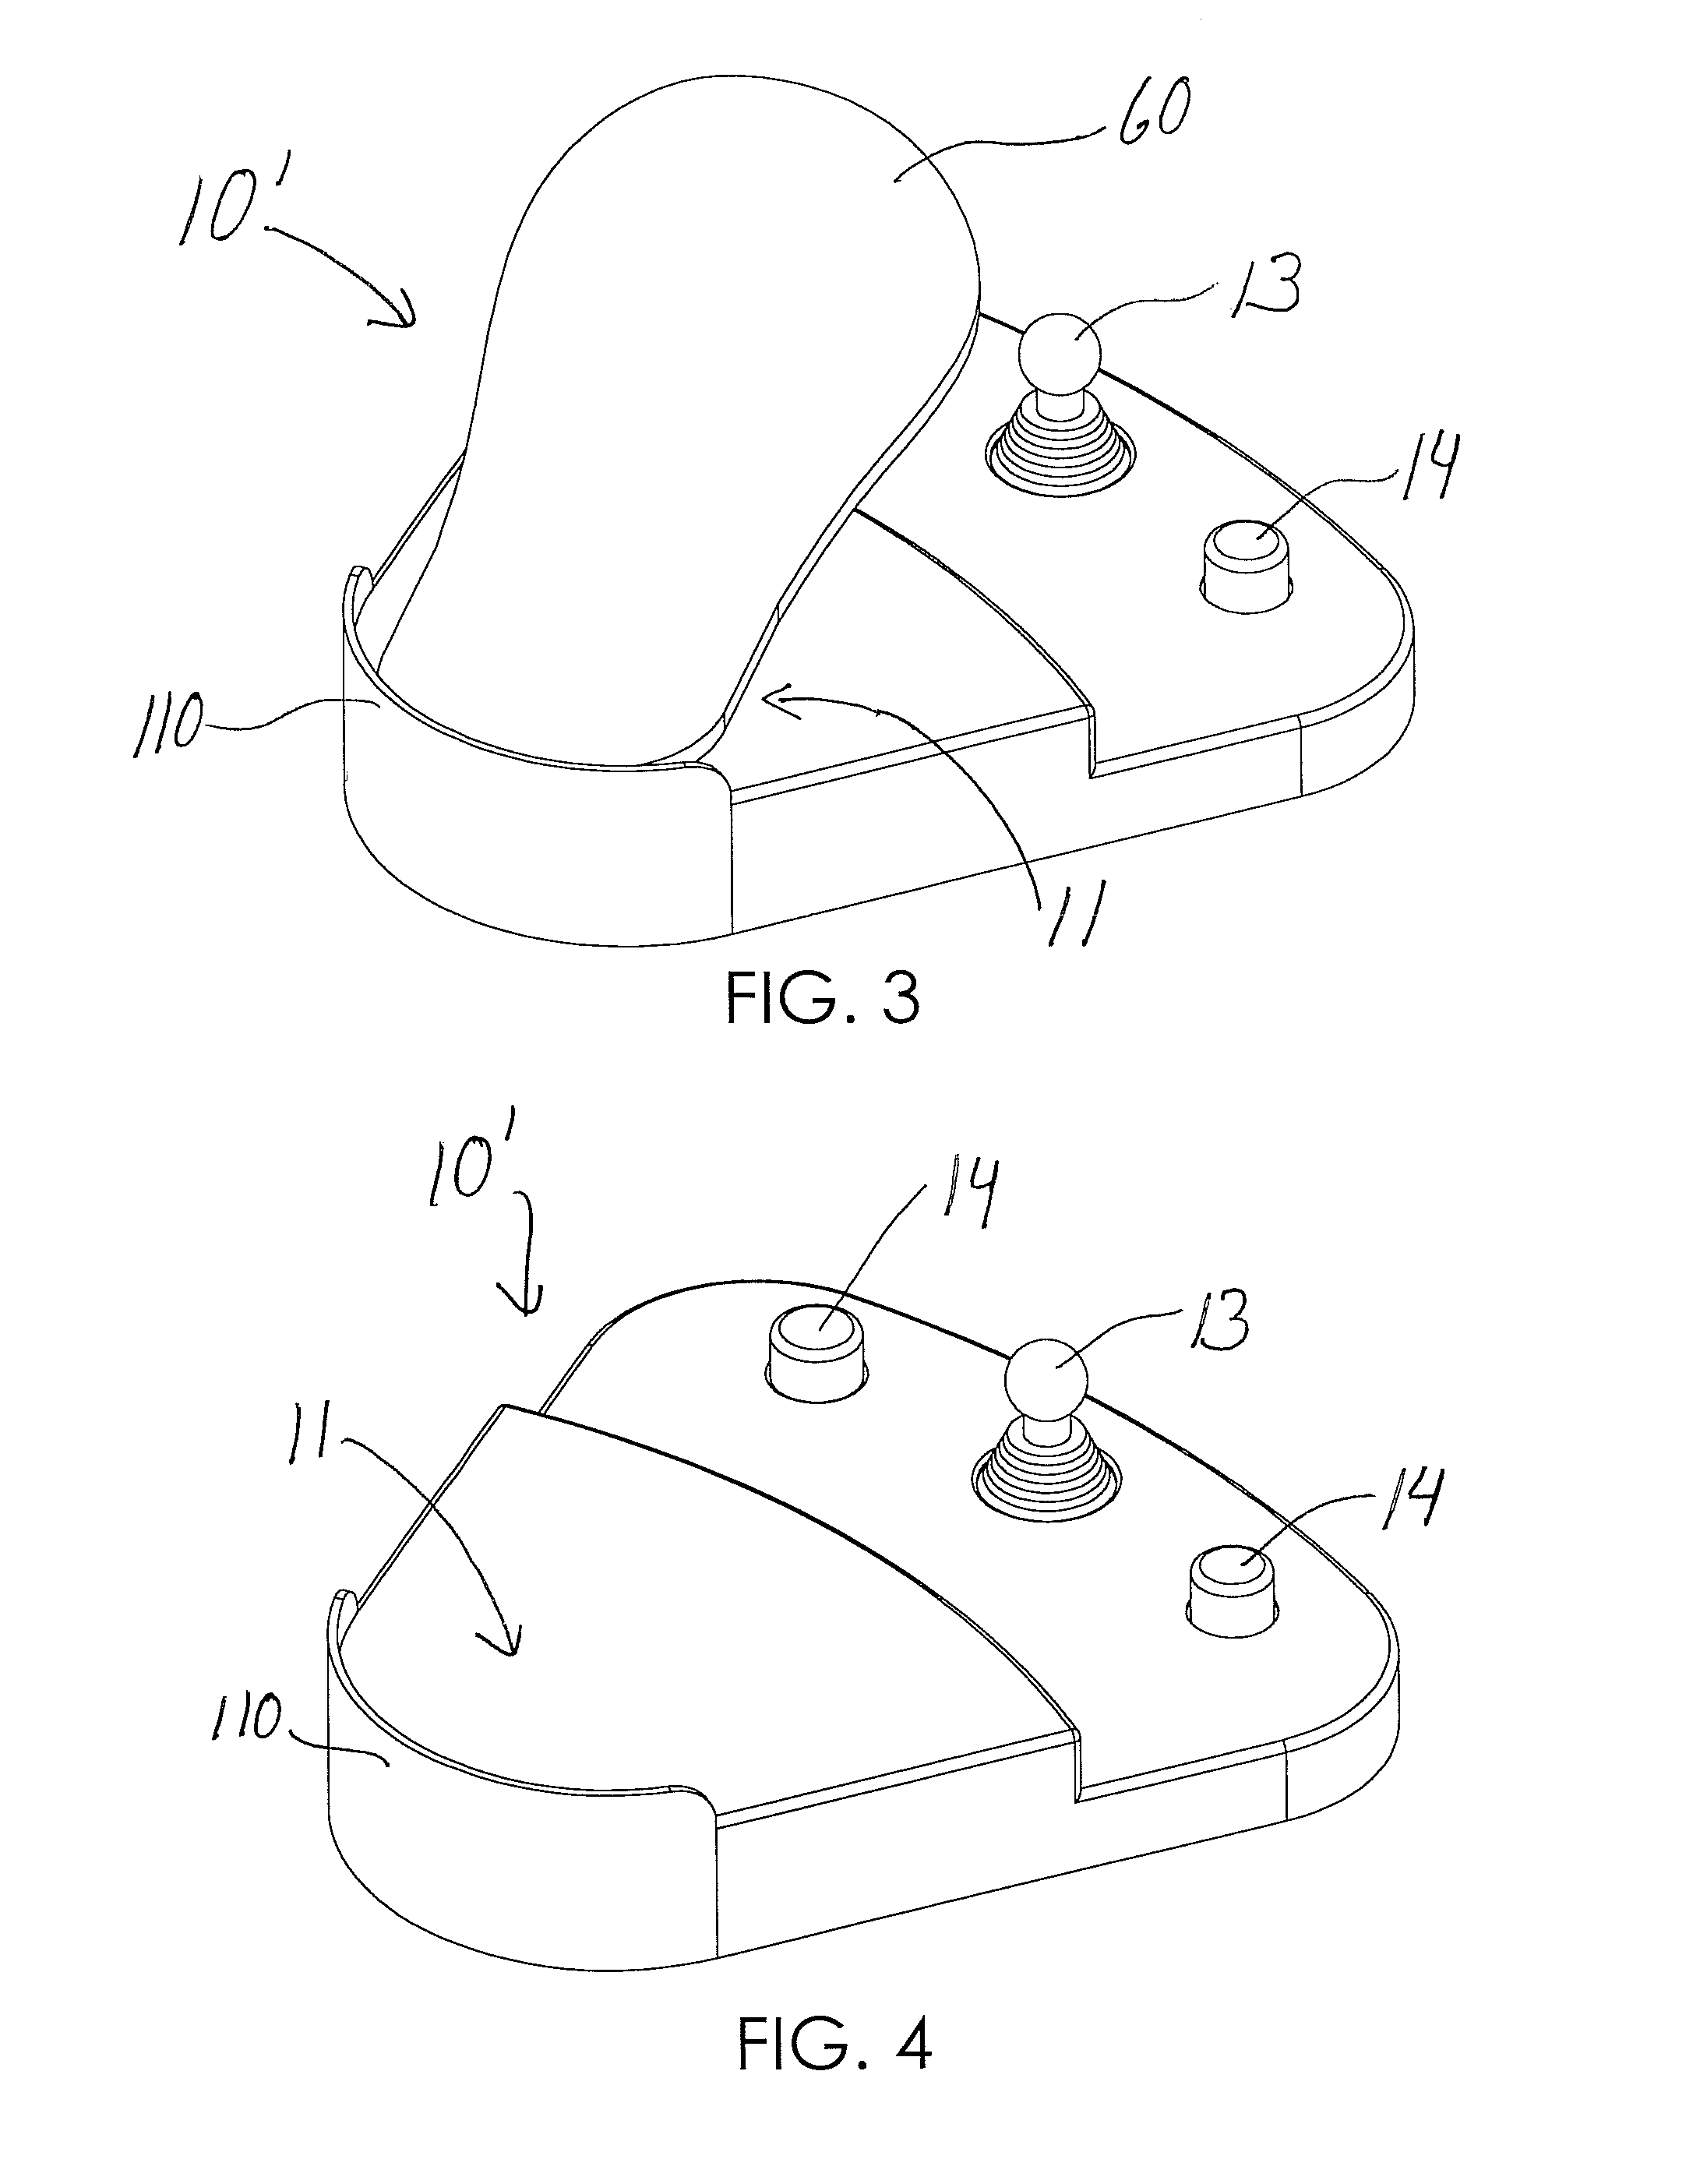 Foot-operated key pad